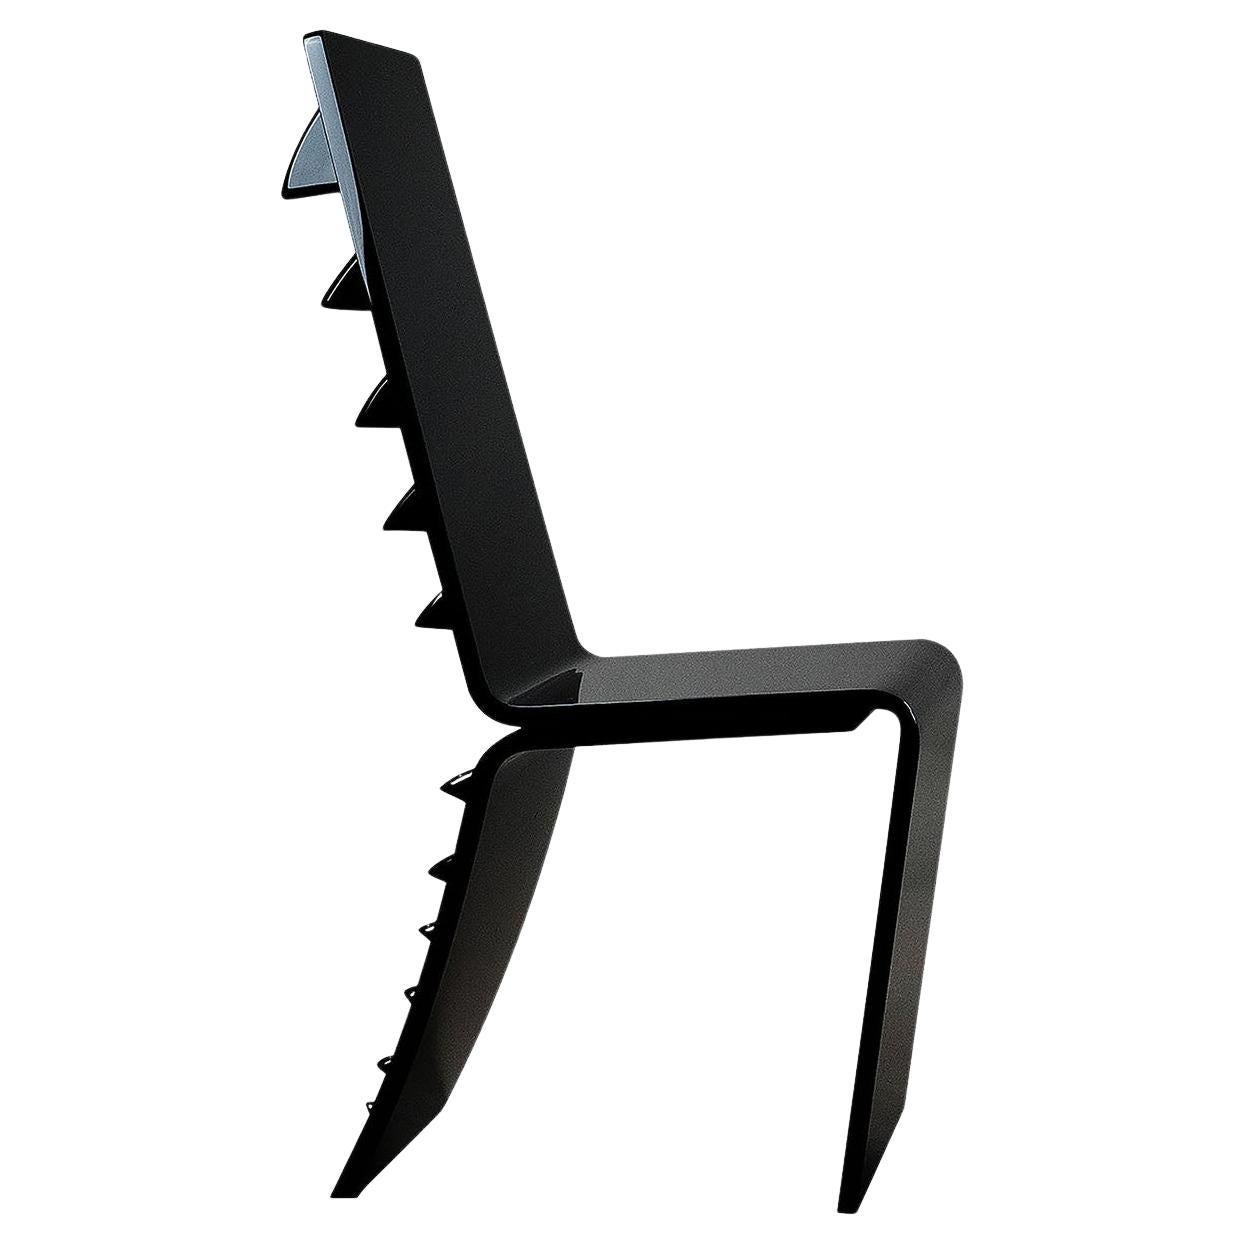 Dragon Black Chair For Sale